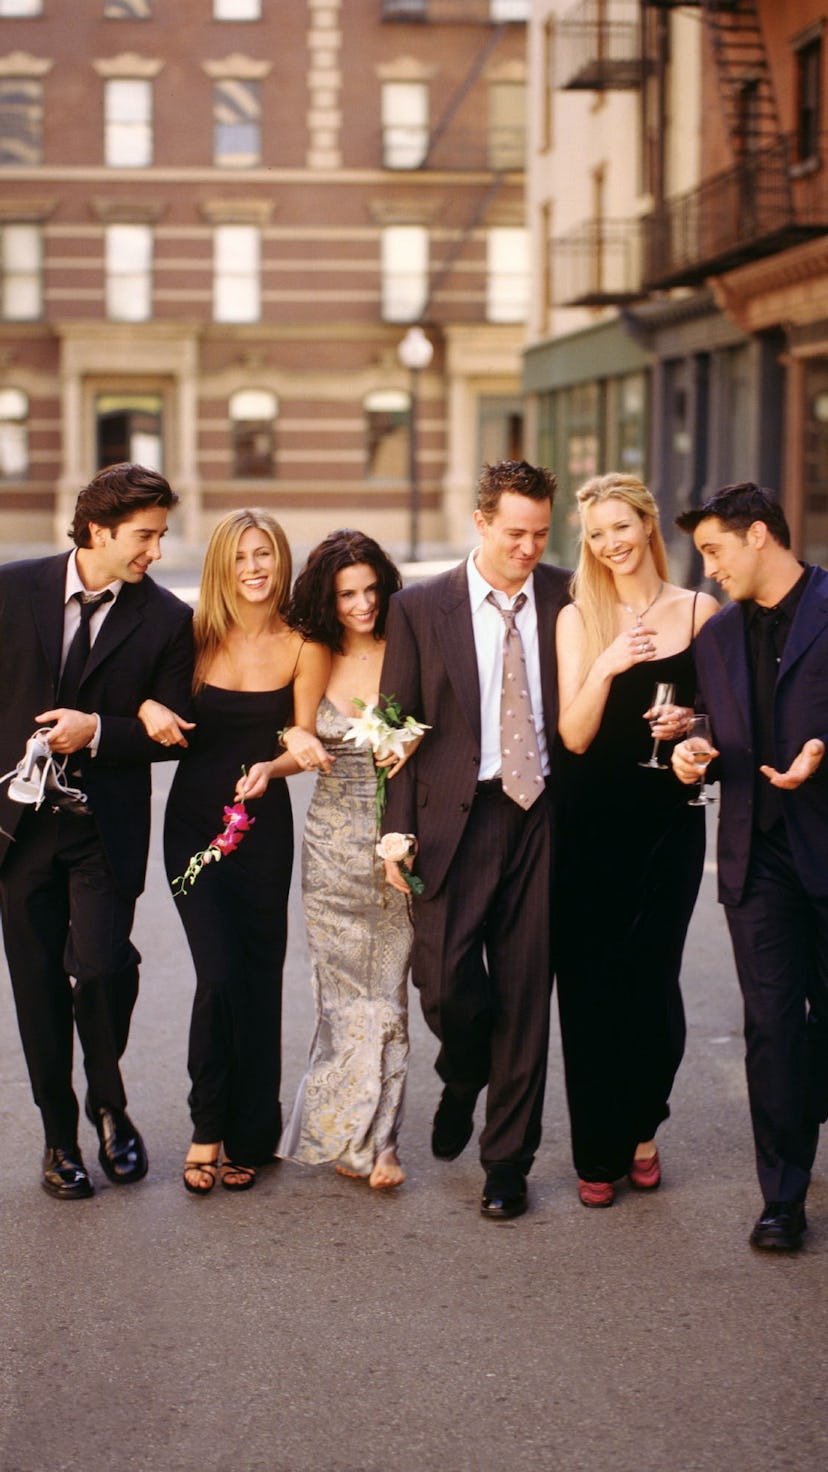 Main cast of the "Friends" sitcom